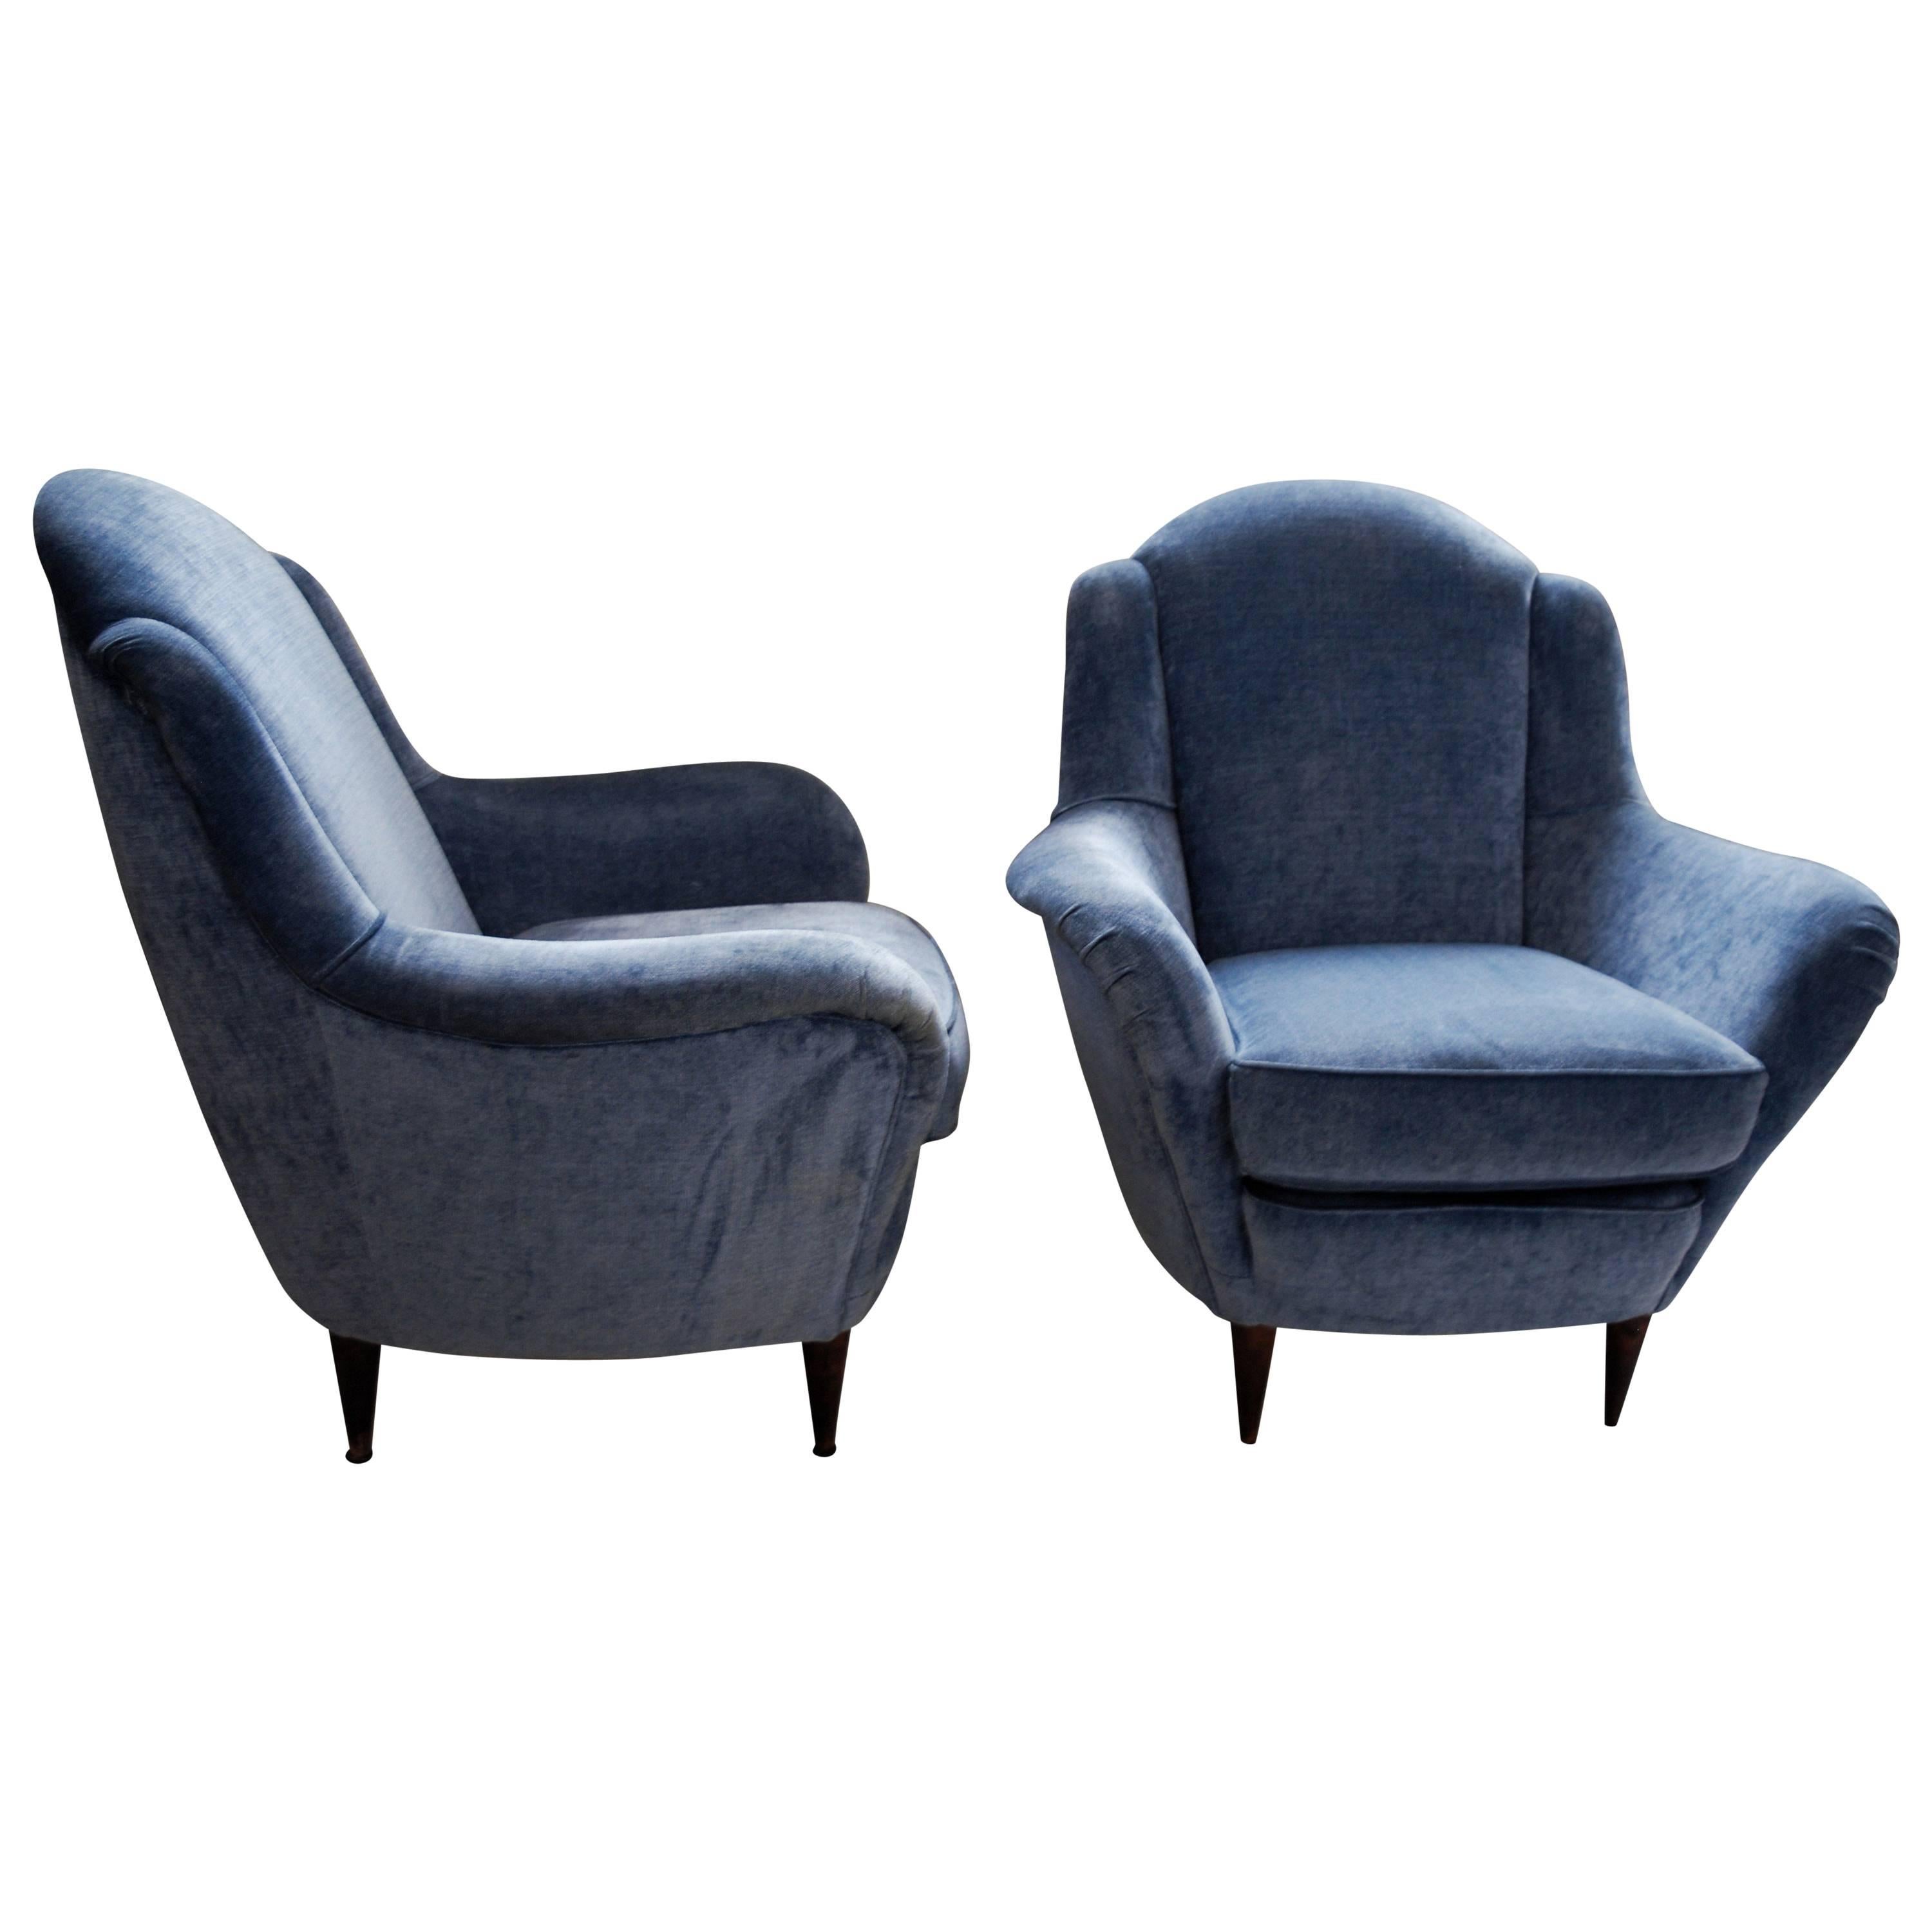 Two Armchairs, Blue Velvet, I.S.A. Bergamo Ico Parisi attr. 1950s, SALE MUST GO